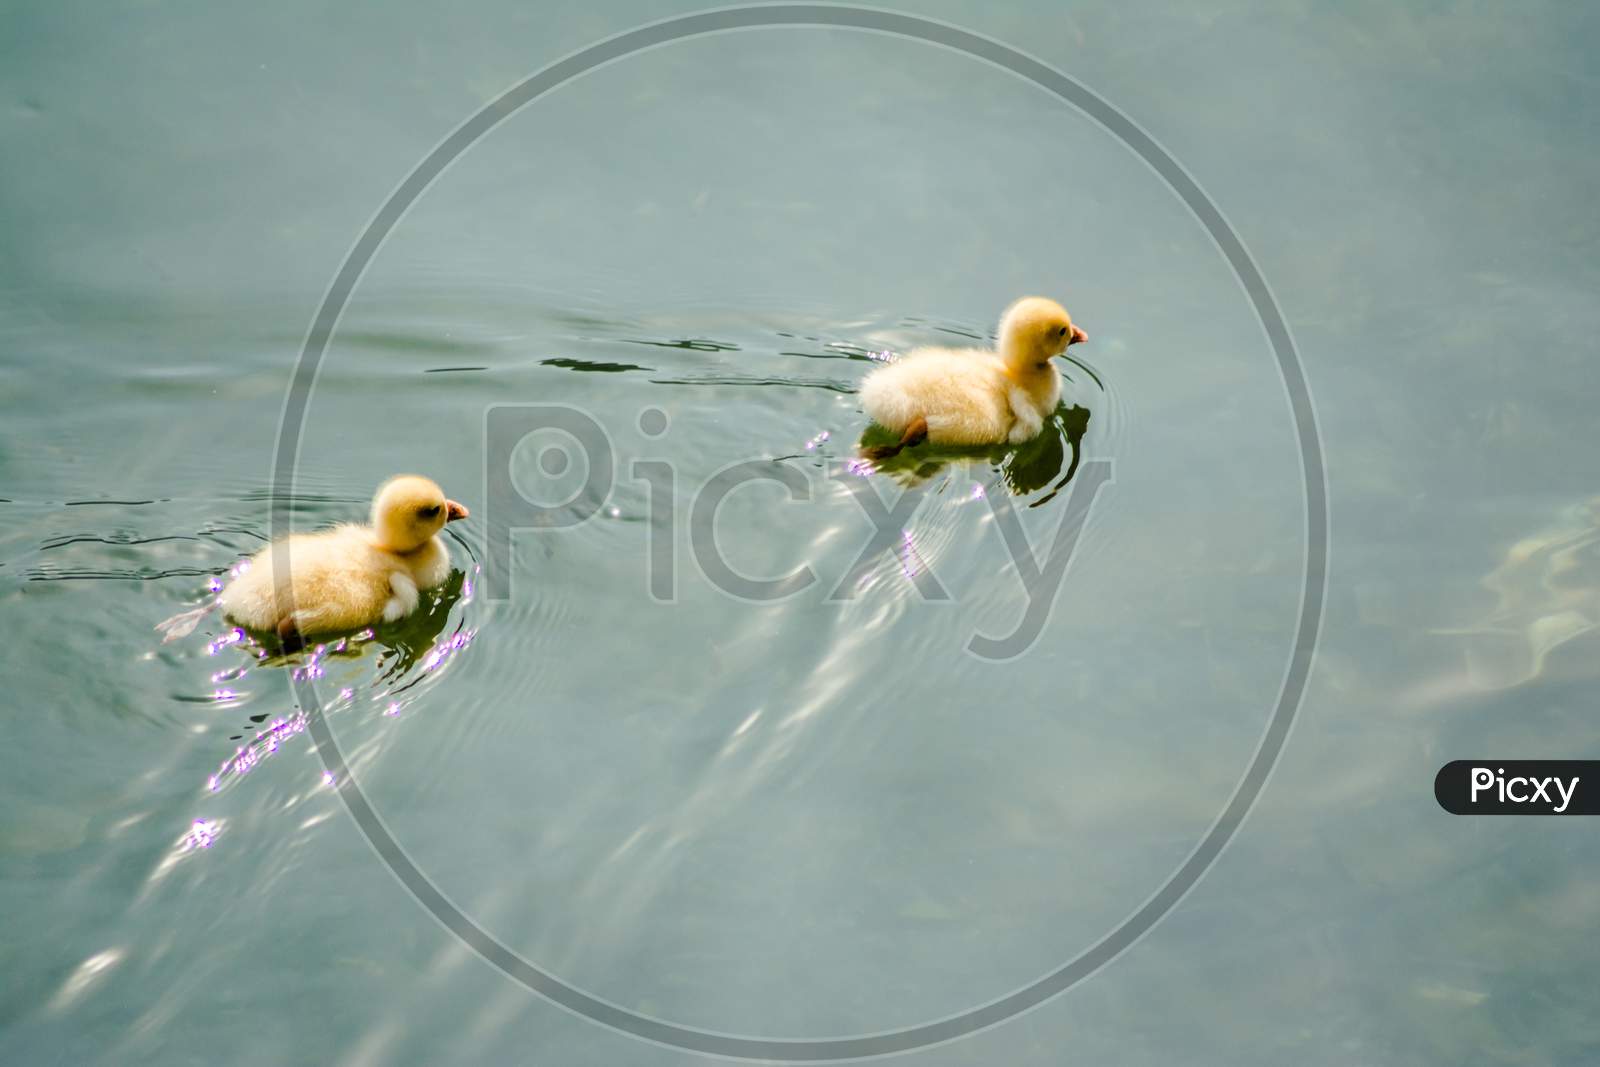 ducks swimming in the water in Beautiful Bhimtal lake of Nainital Uttarakhand